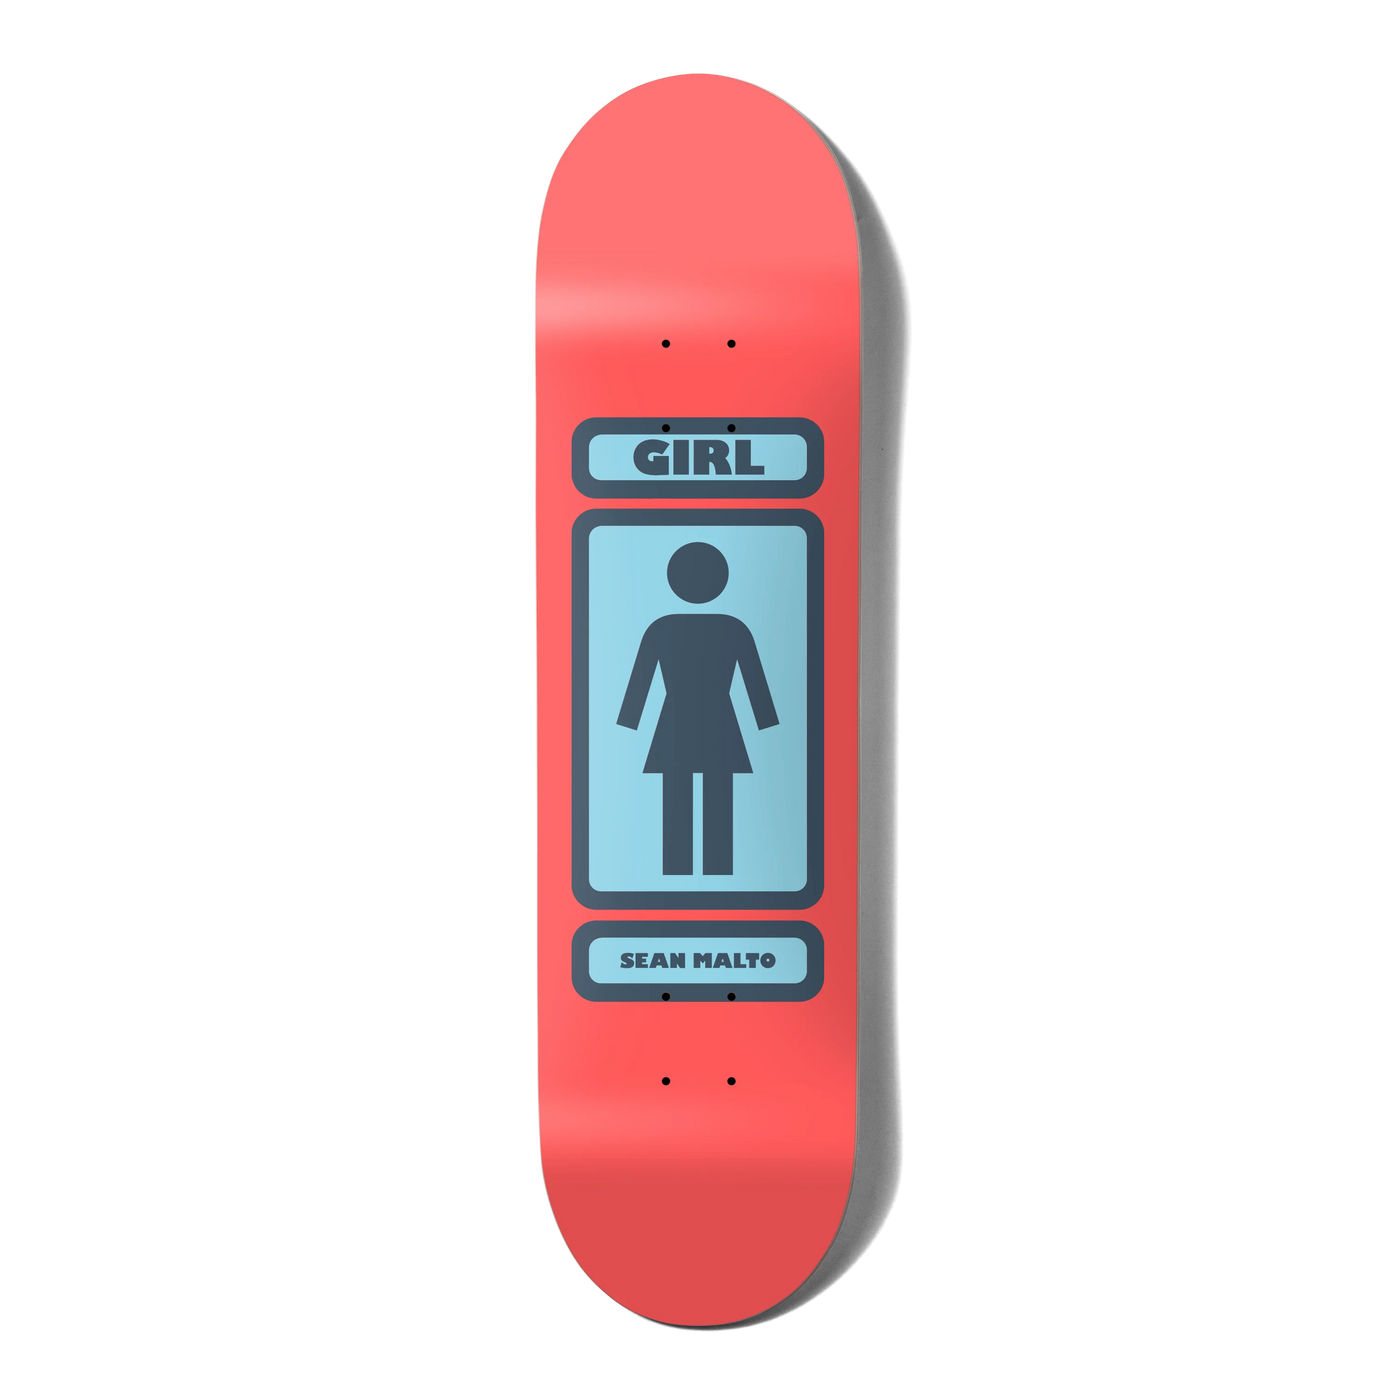 Girl Sean Malto 93 Til W45D1 Skateboard Deck - 8.0"